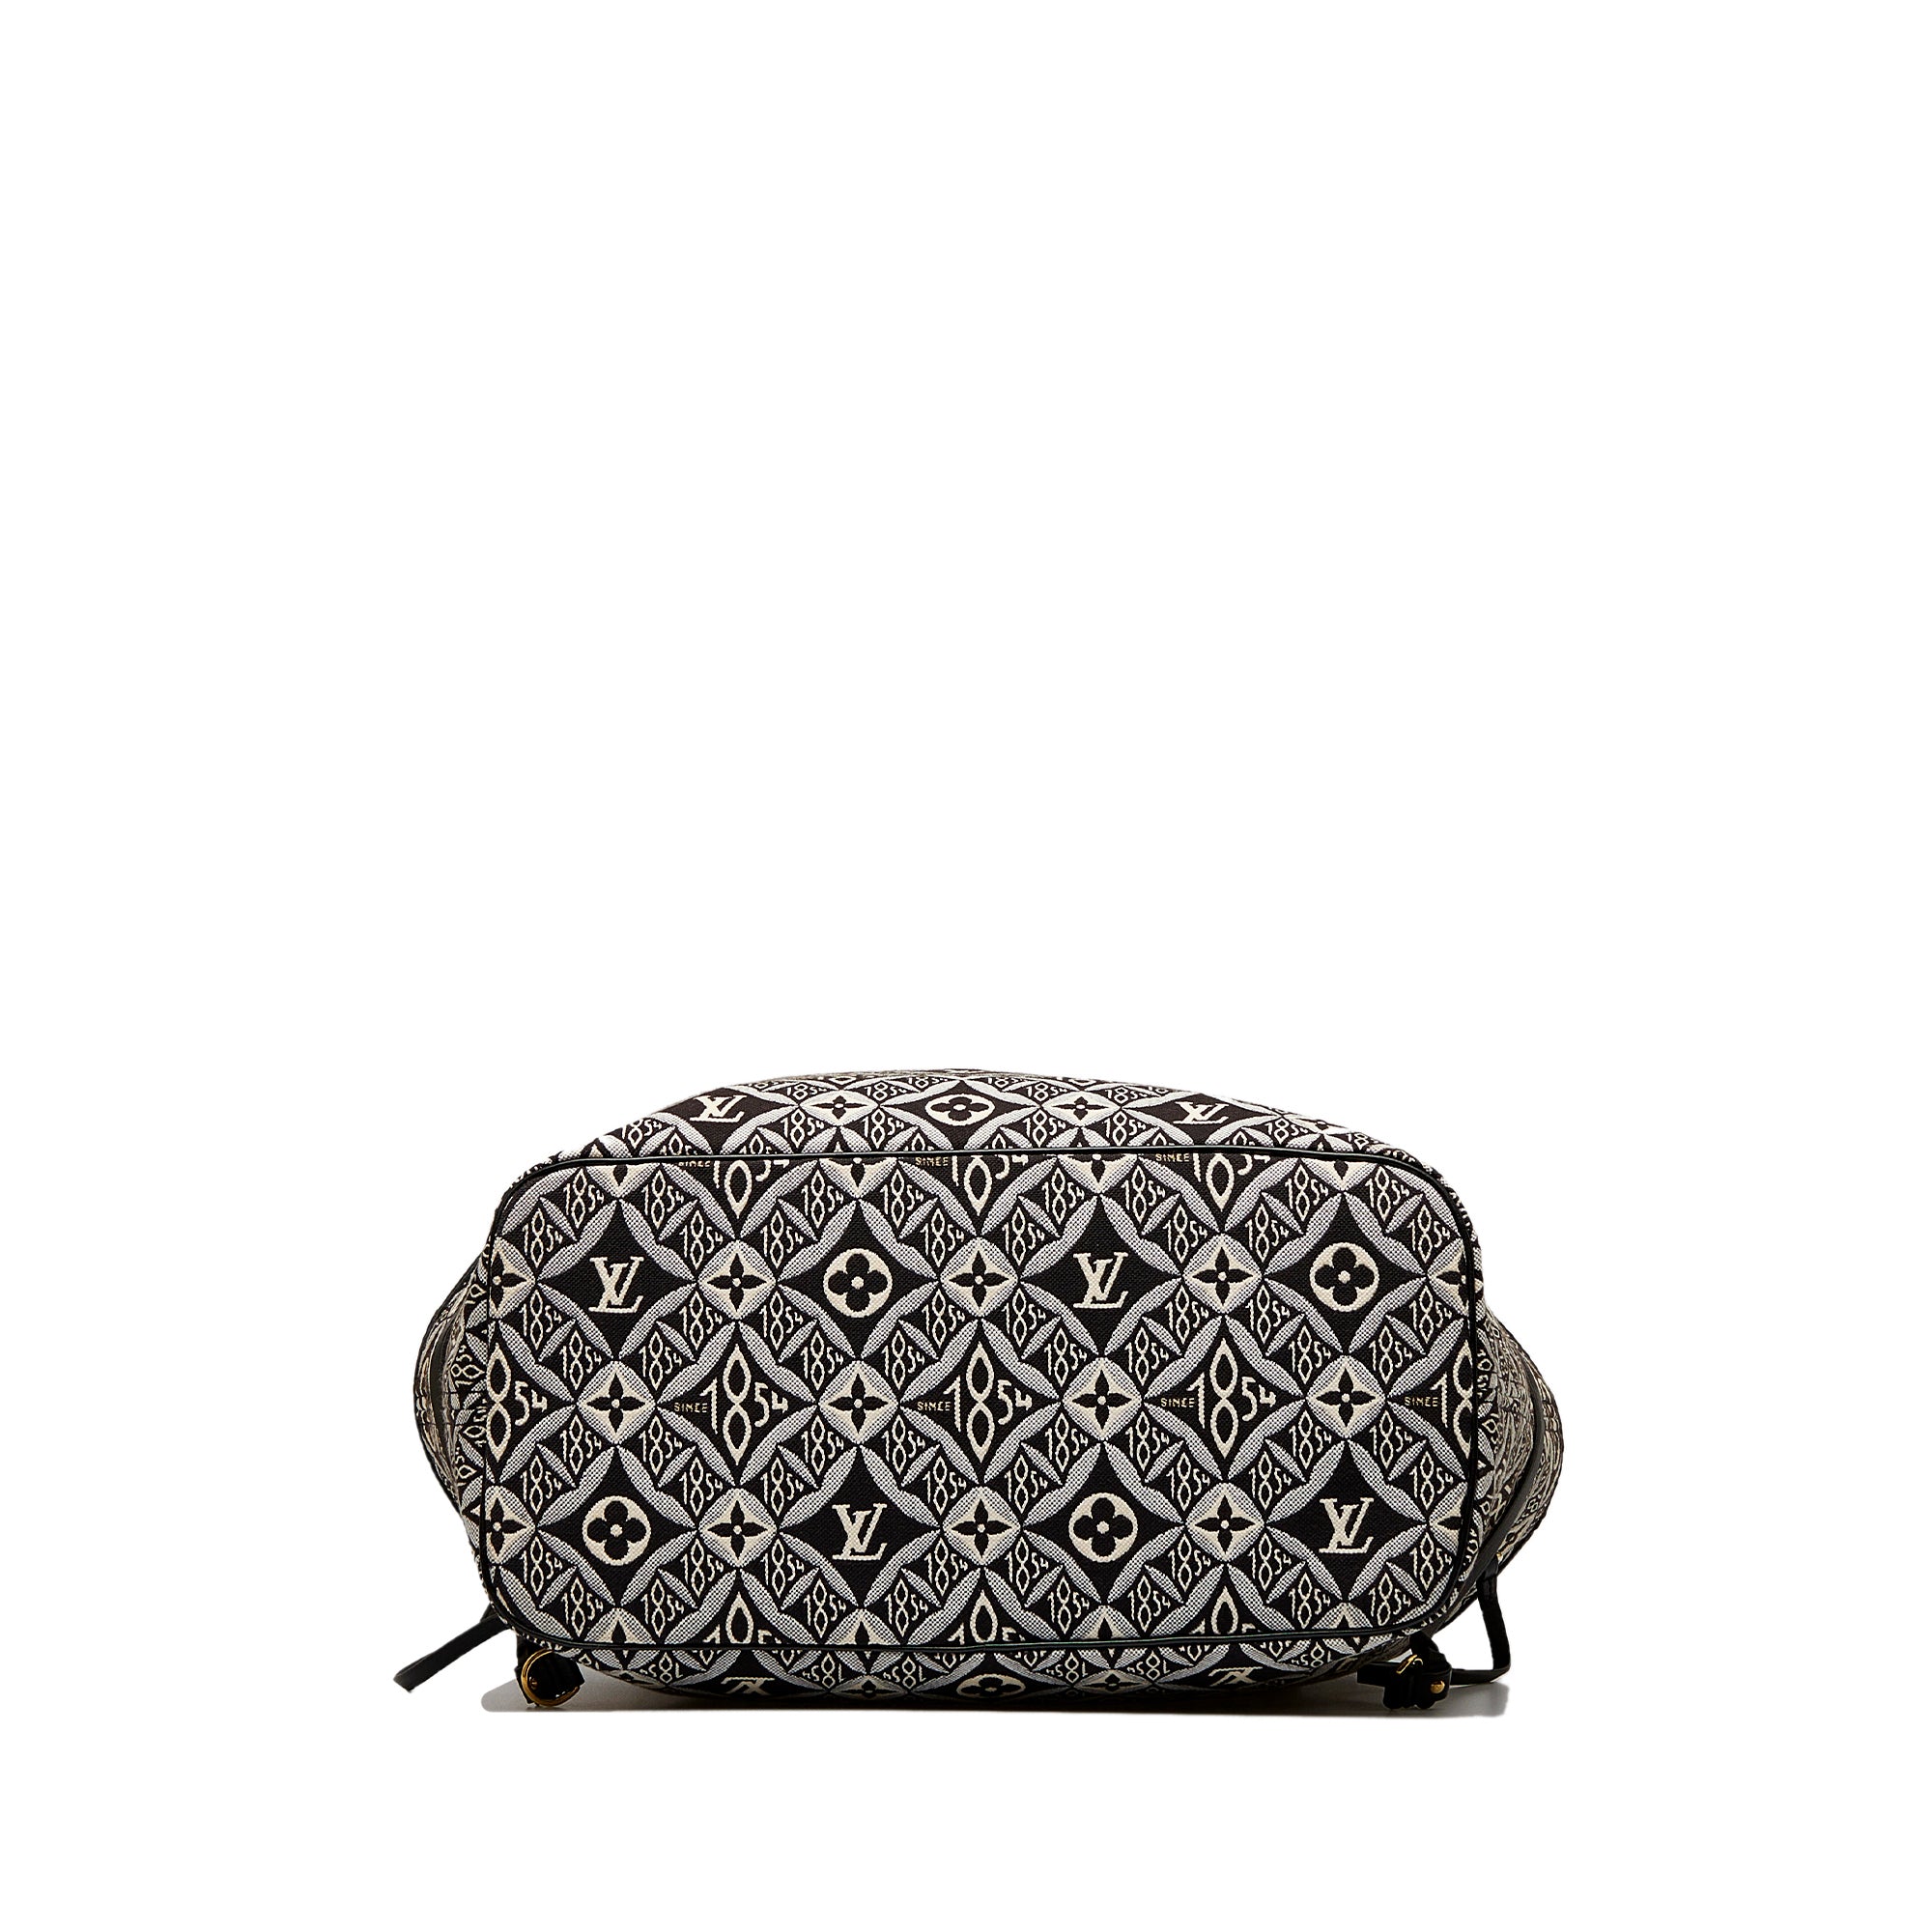 Louis Vuitton Since 1854 Neverfull MM - Black Totes, Handbags